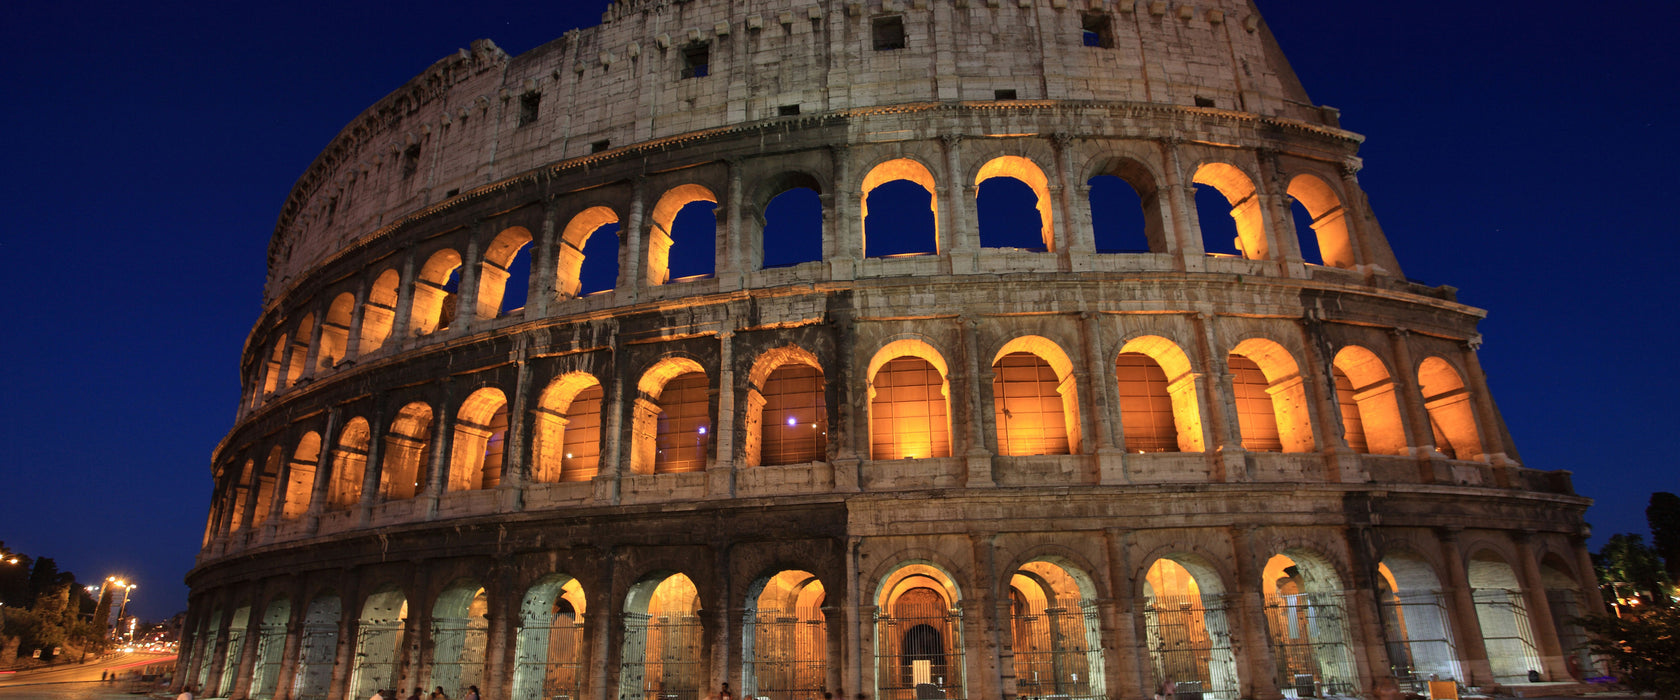 Colosseum in Rom, Glasbild Panorama